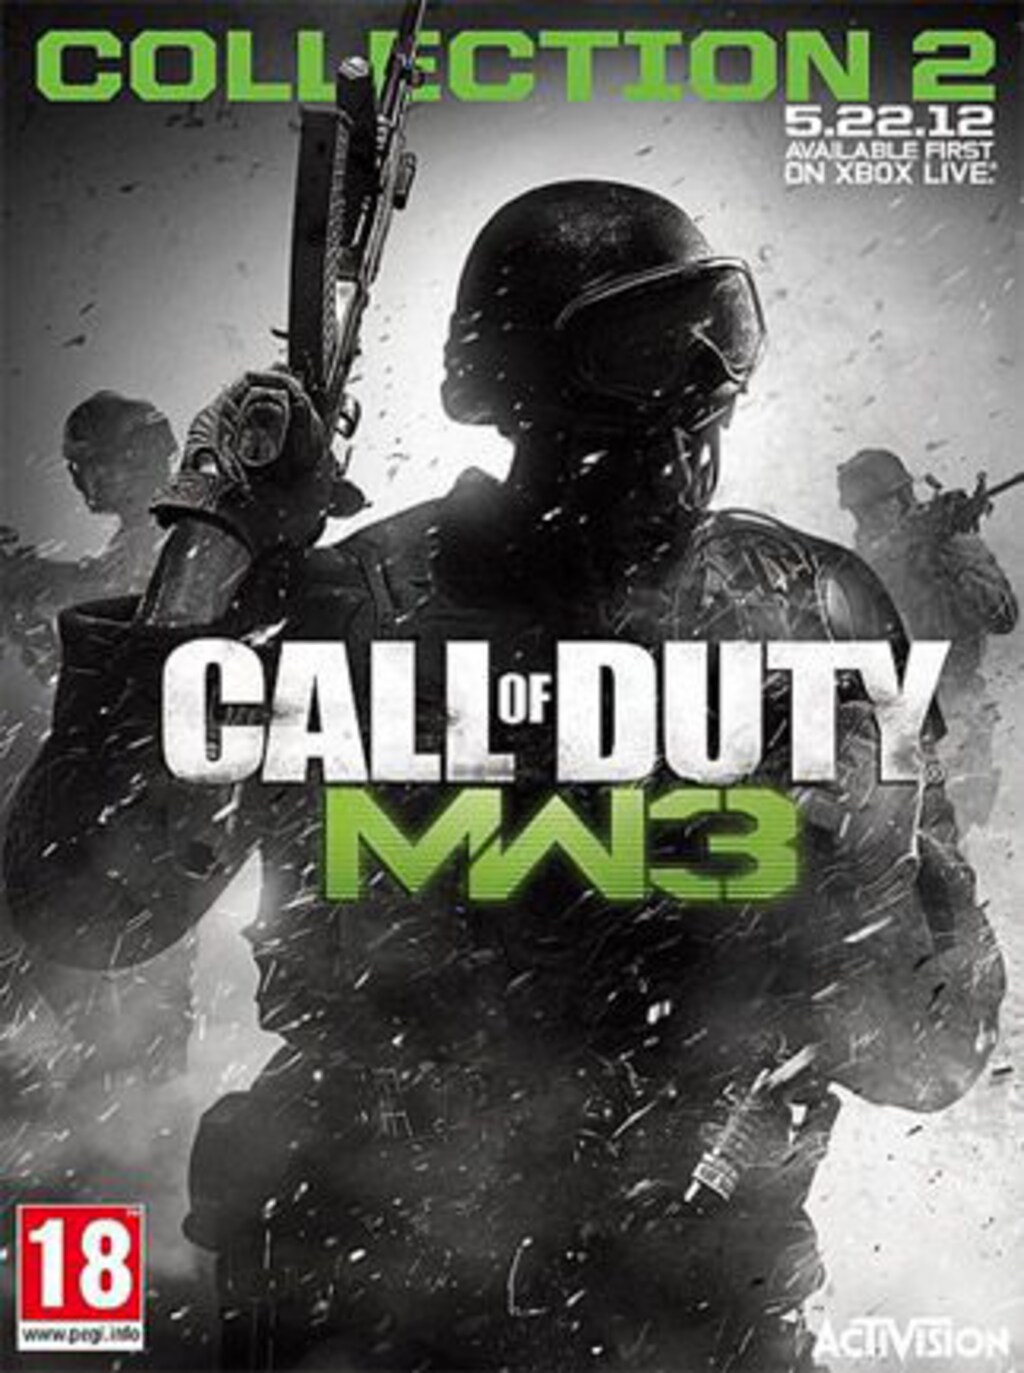 FIFA 23 Outsells Modern Warfare 2 In UK Following Black Friday Sales